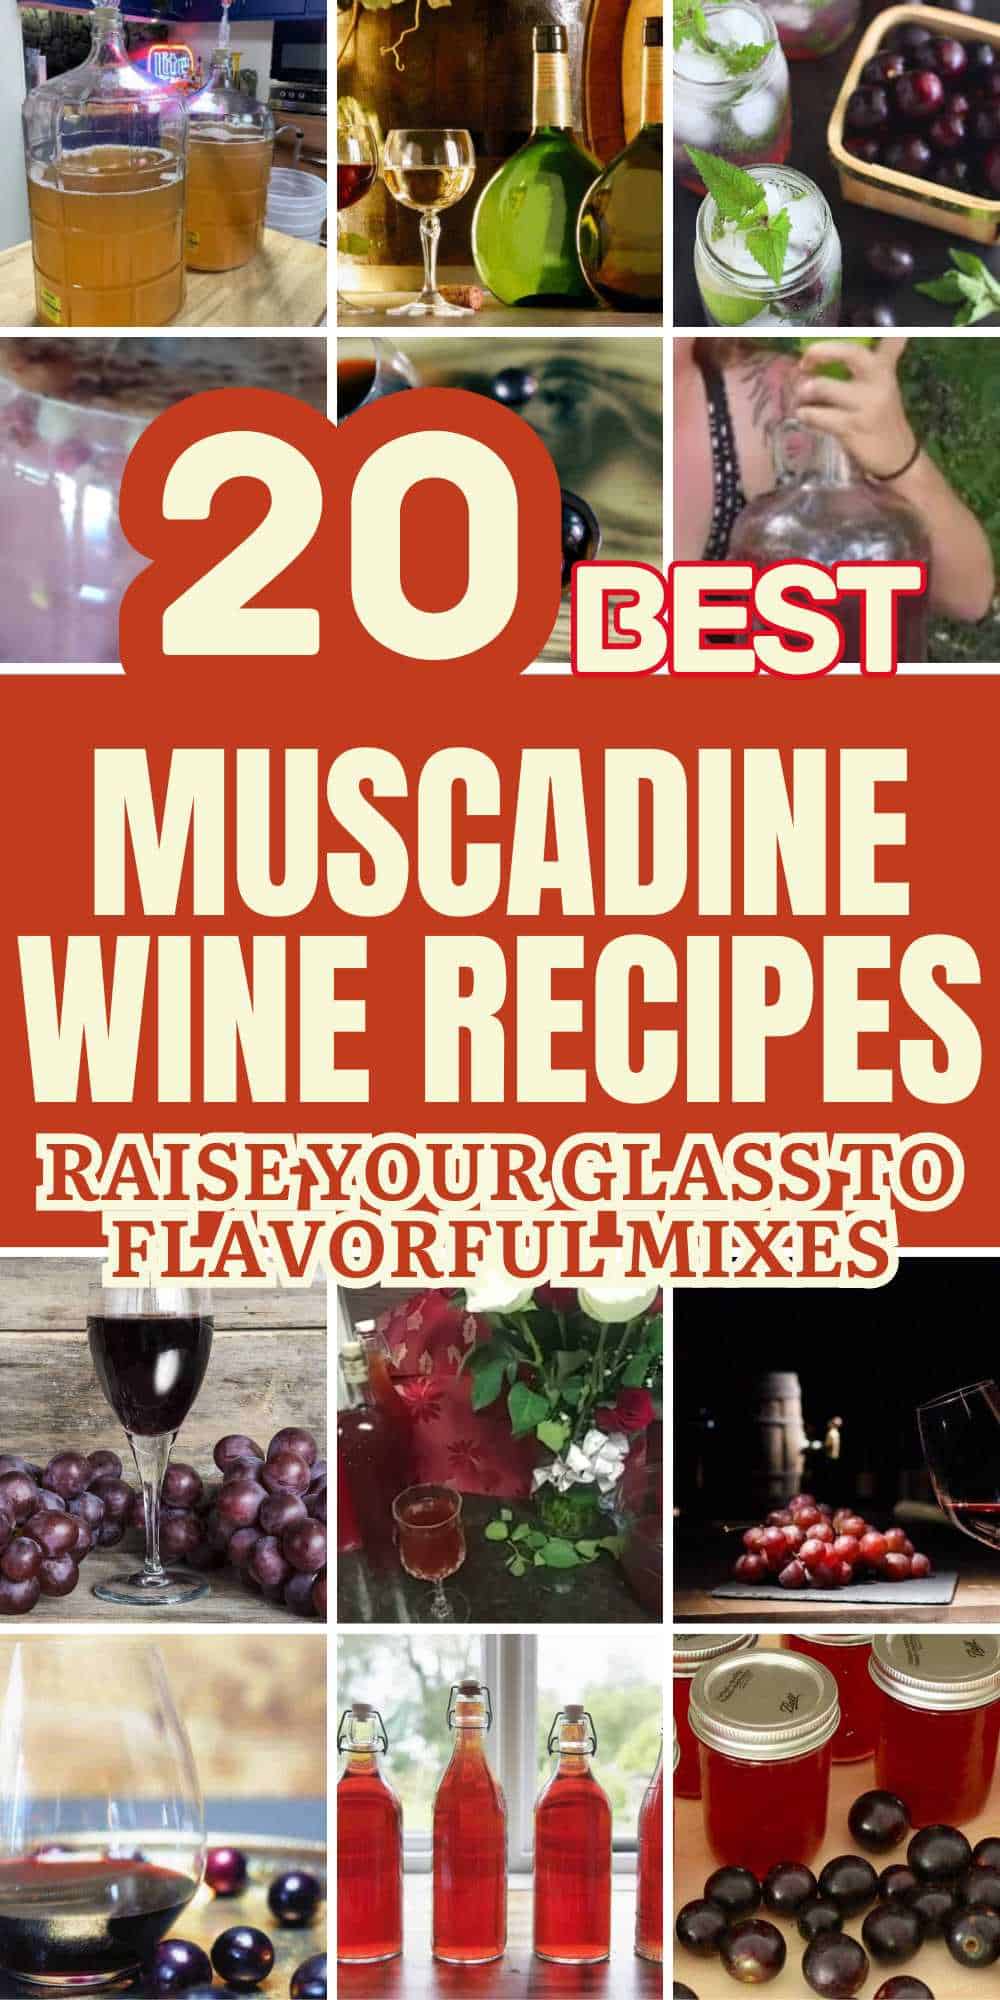 how-to-make-muscadine-wine